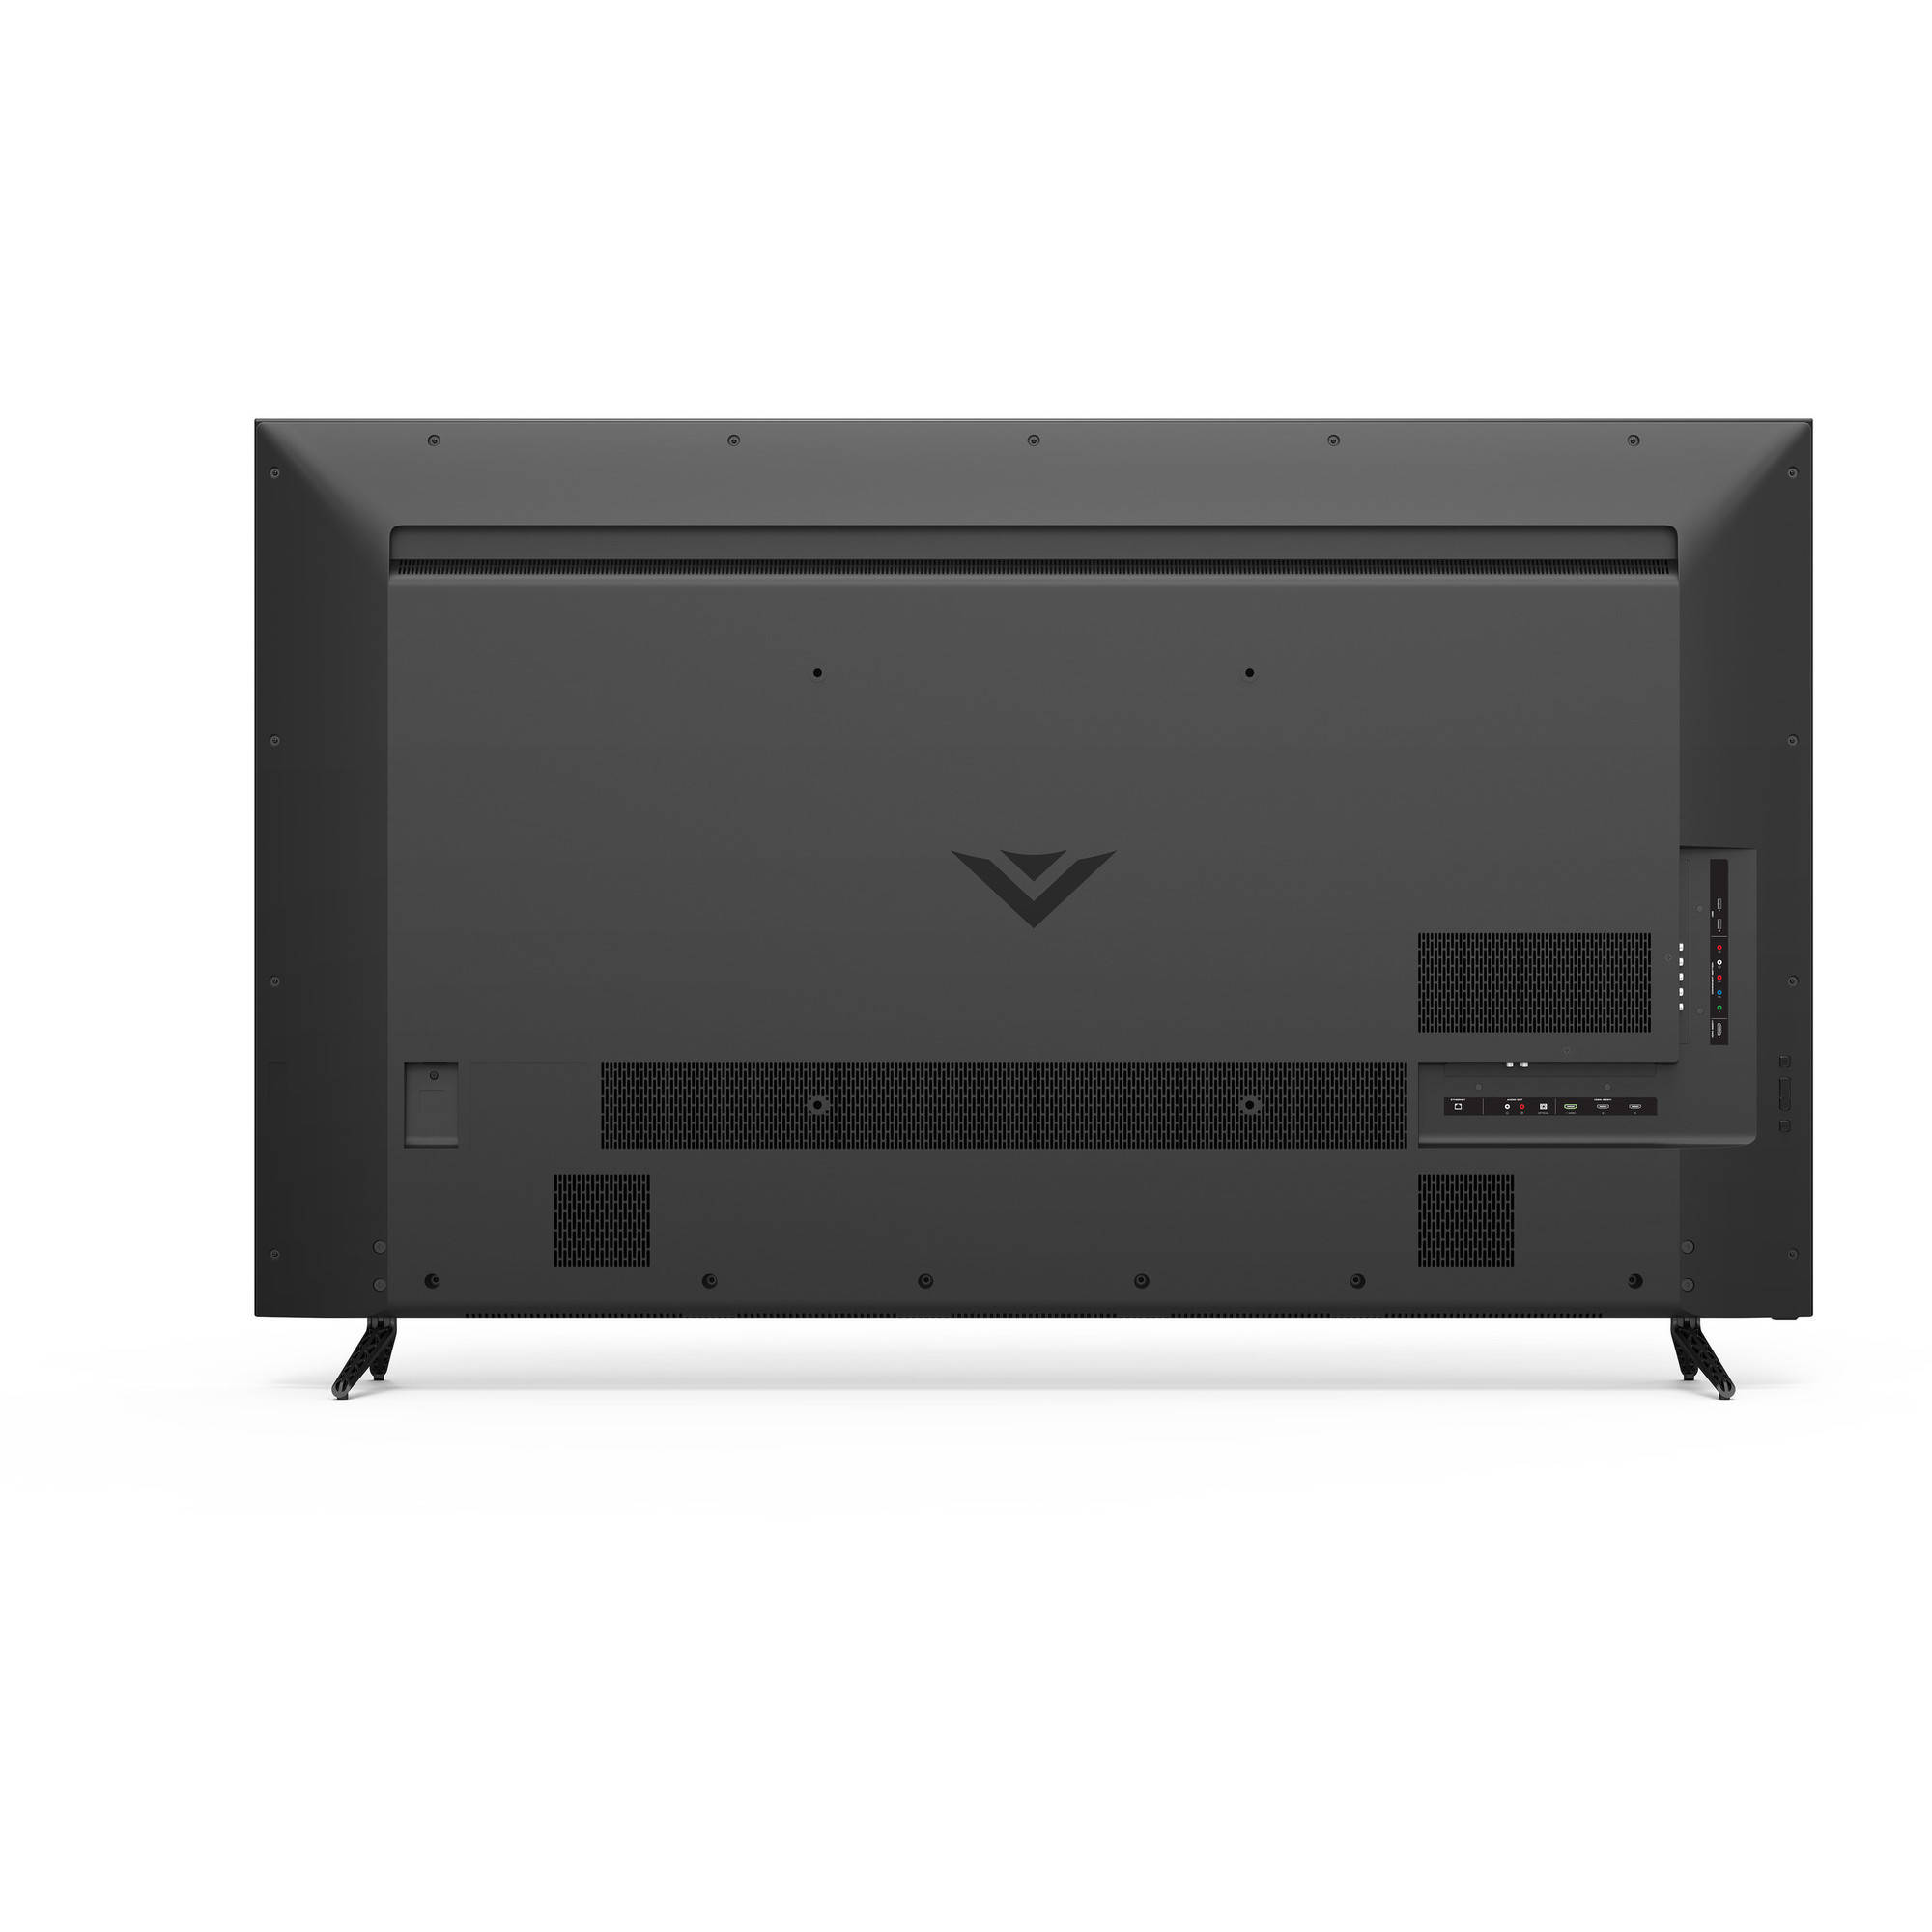 VIZIO SmartCast E-Series 65" Class (64.5" Diag.) Ultra HD 2160p 120Hz Full Array LED Smart Home Theater Display w/ Chromecast built-in (E65u-D3) - image 7 of 28